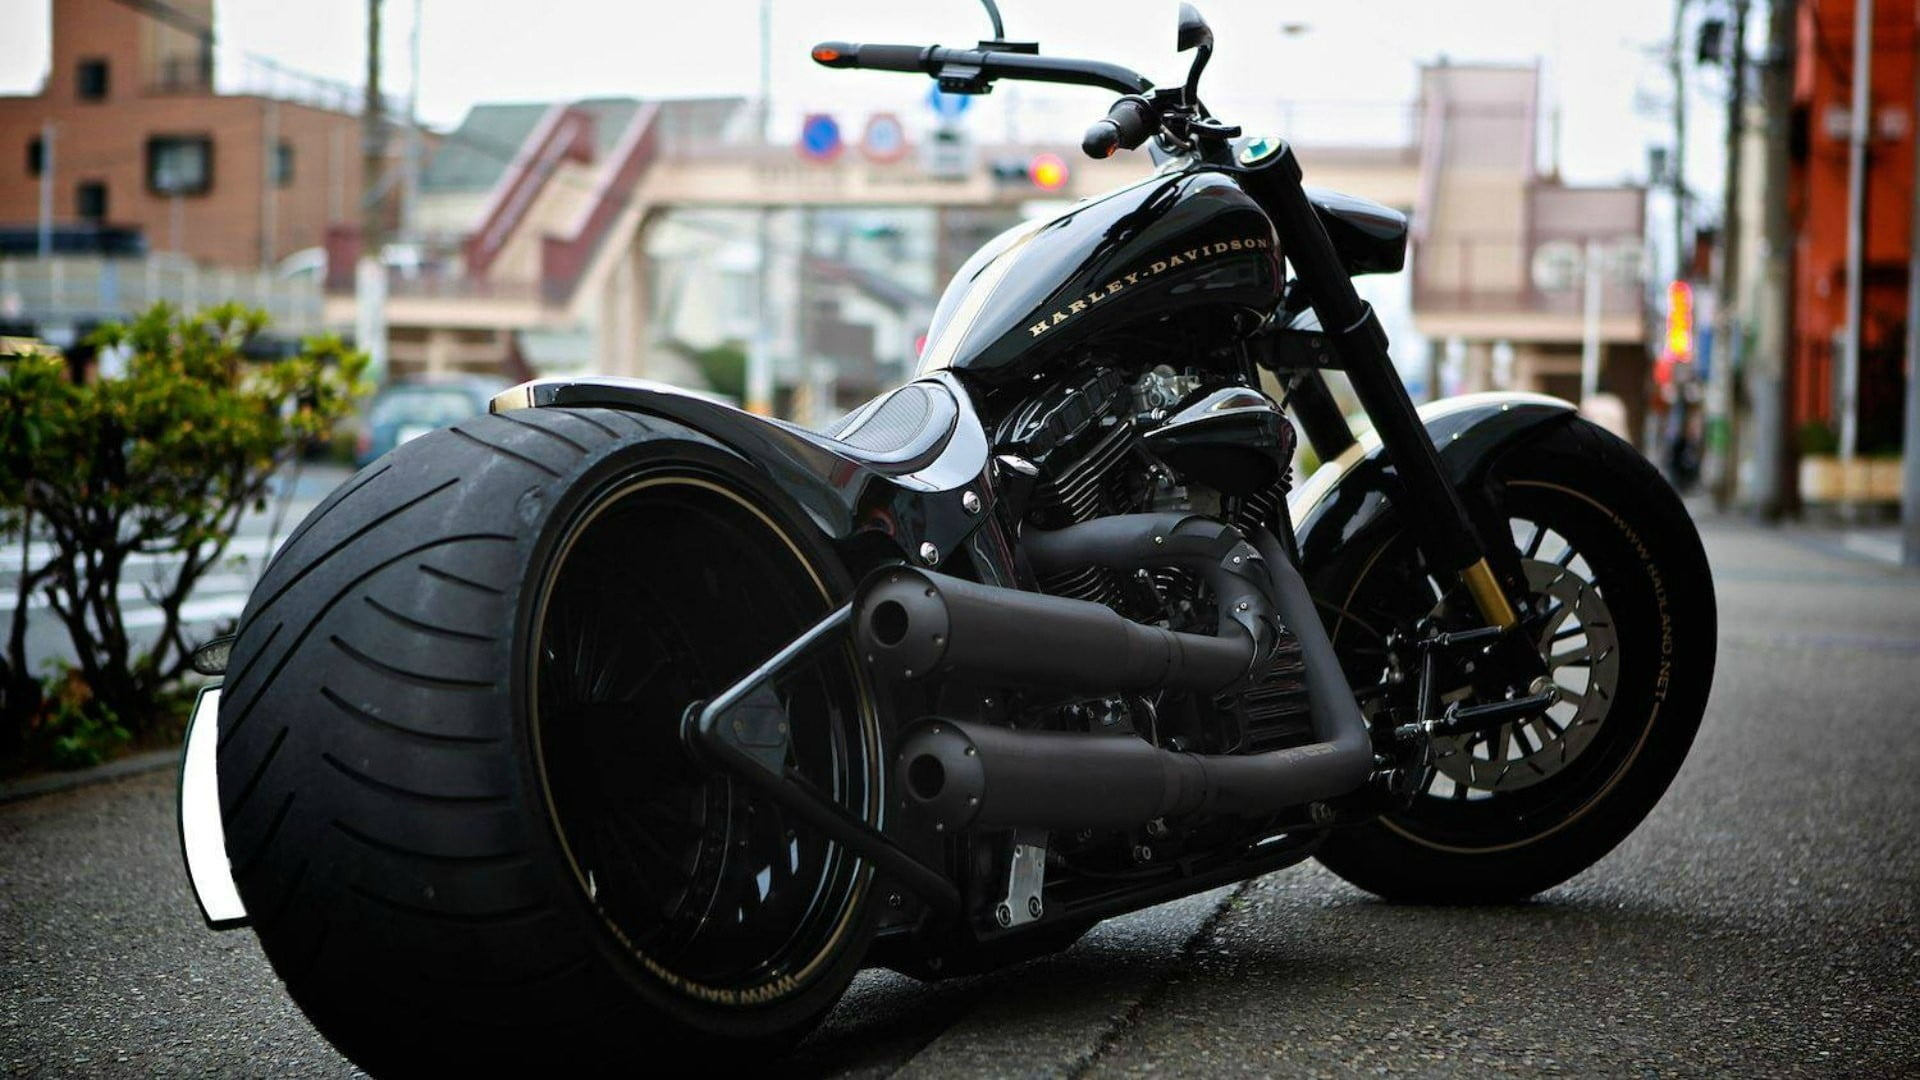 Black Harley-Davidson chopper motorcycle wallpaper, vehicle, transportation